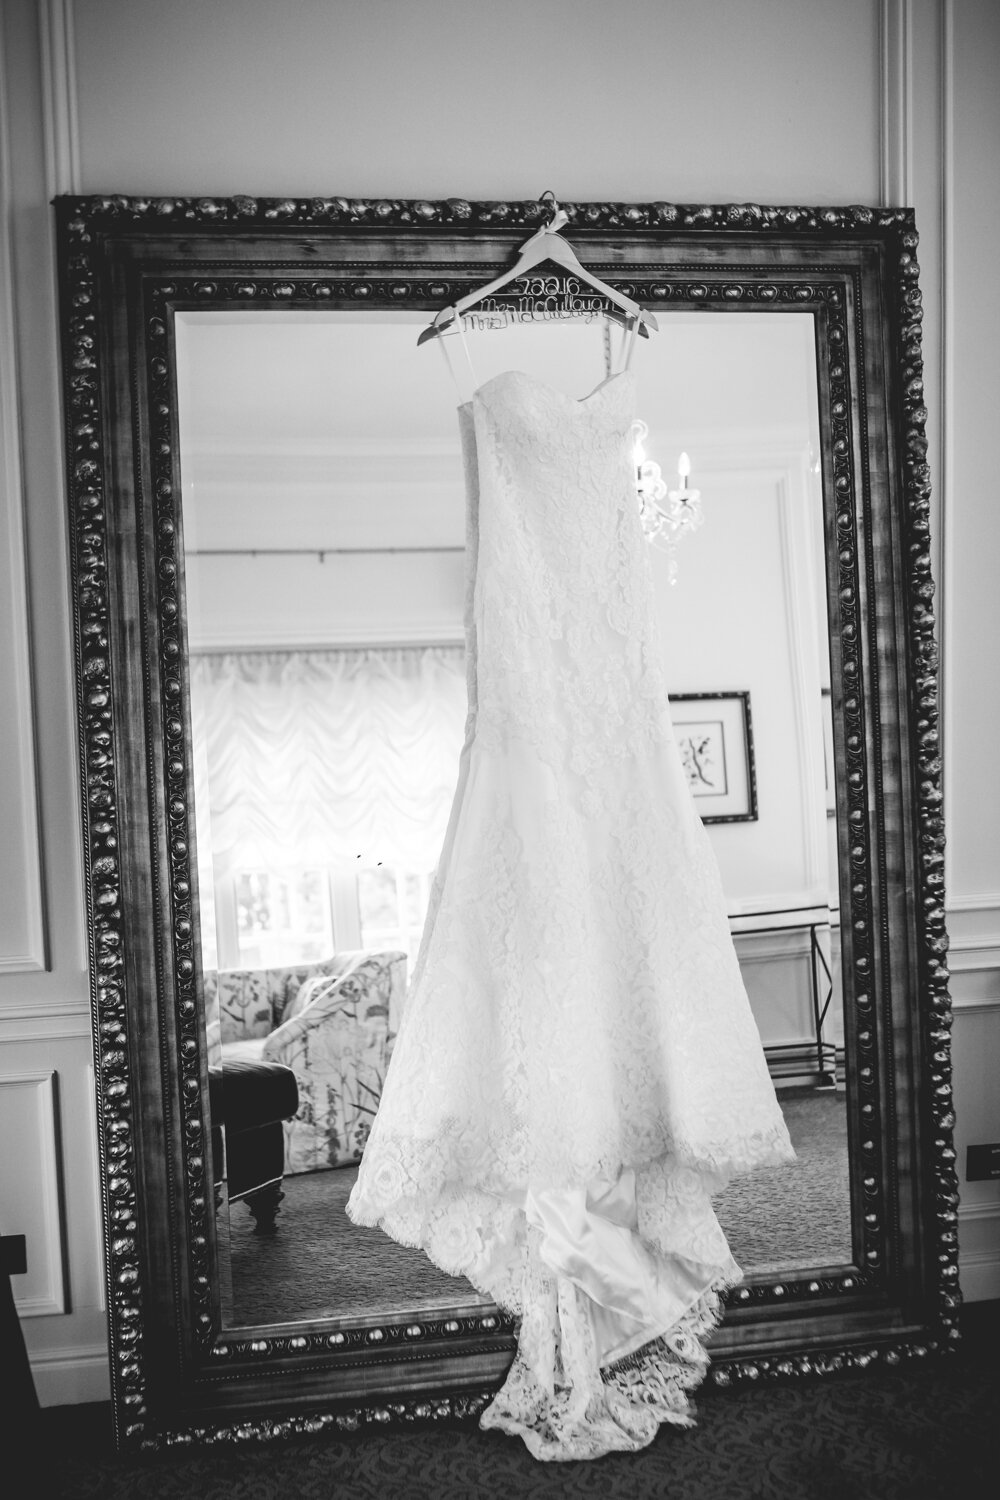  Wedding dress hanging on mirror.&nbsp;Photographed by JMGant Photography, Denver Colorado wedding photographer.&nbsp; 